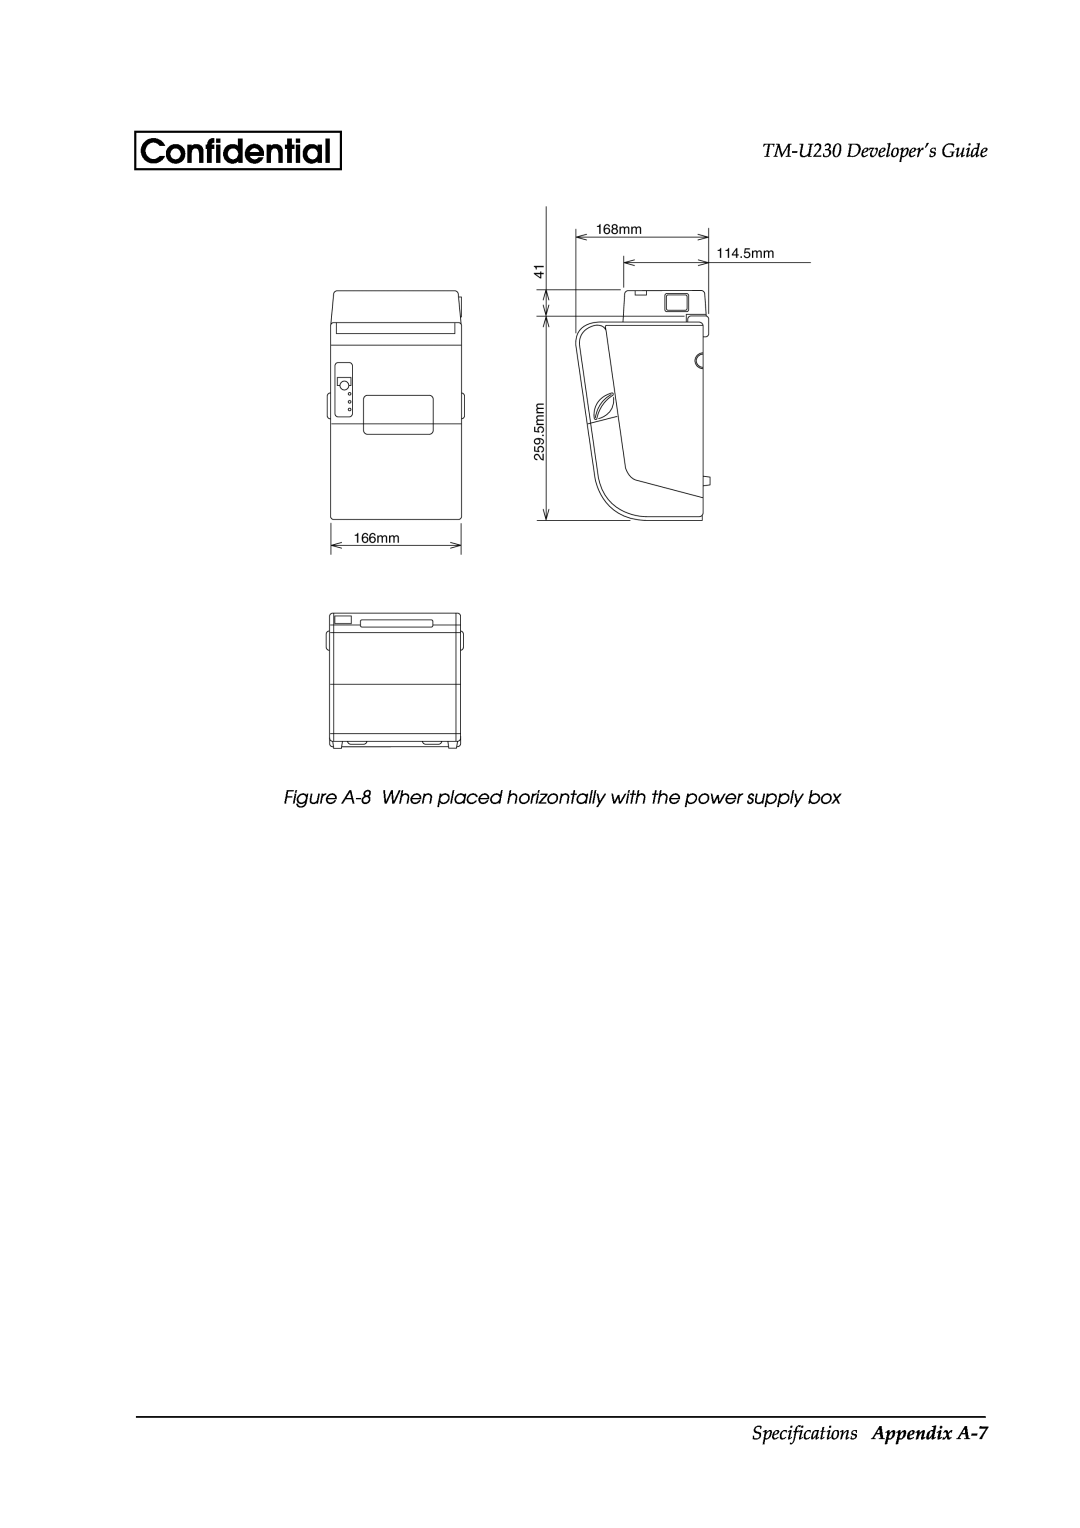 Epson manual Specifications Appendix A-7, Confidential, TM-U230 Developer’s Guide, 259.5mm 166mm, 168mm 114.5mm 